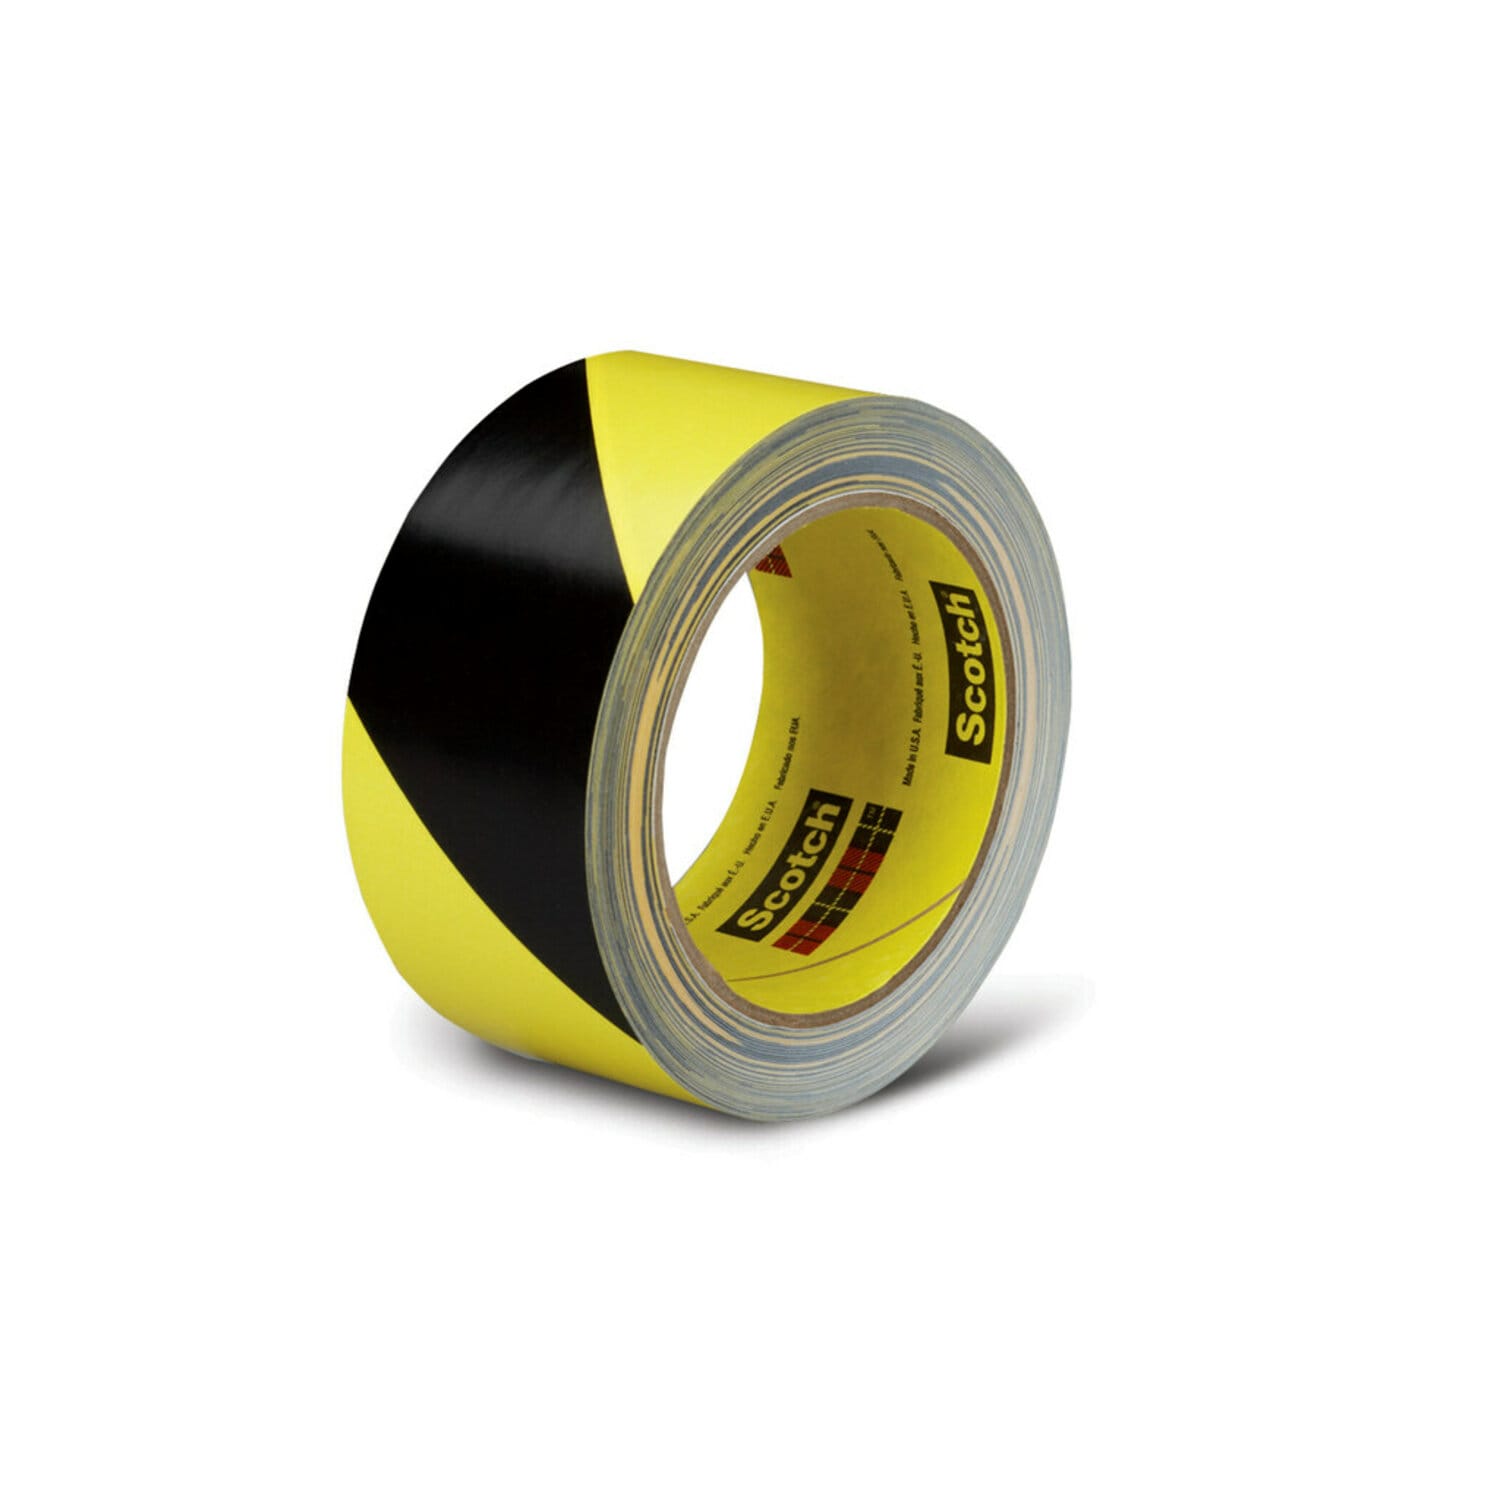 7010312470 - 3M Safety Stripe Tape 5702, Black/Yellow, 48 in x 36 yd, 5.4 mil, 4
rolls per case